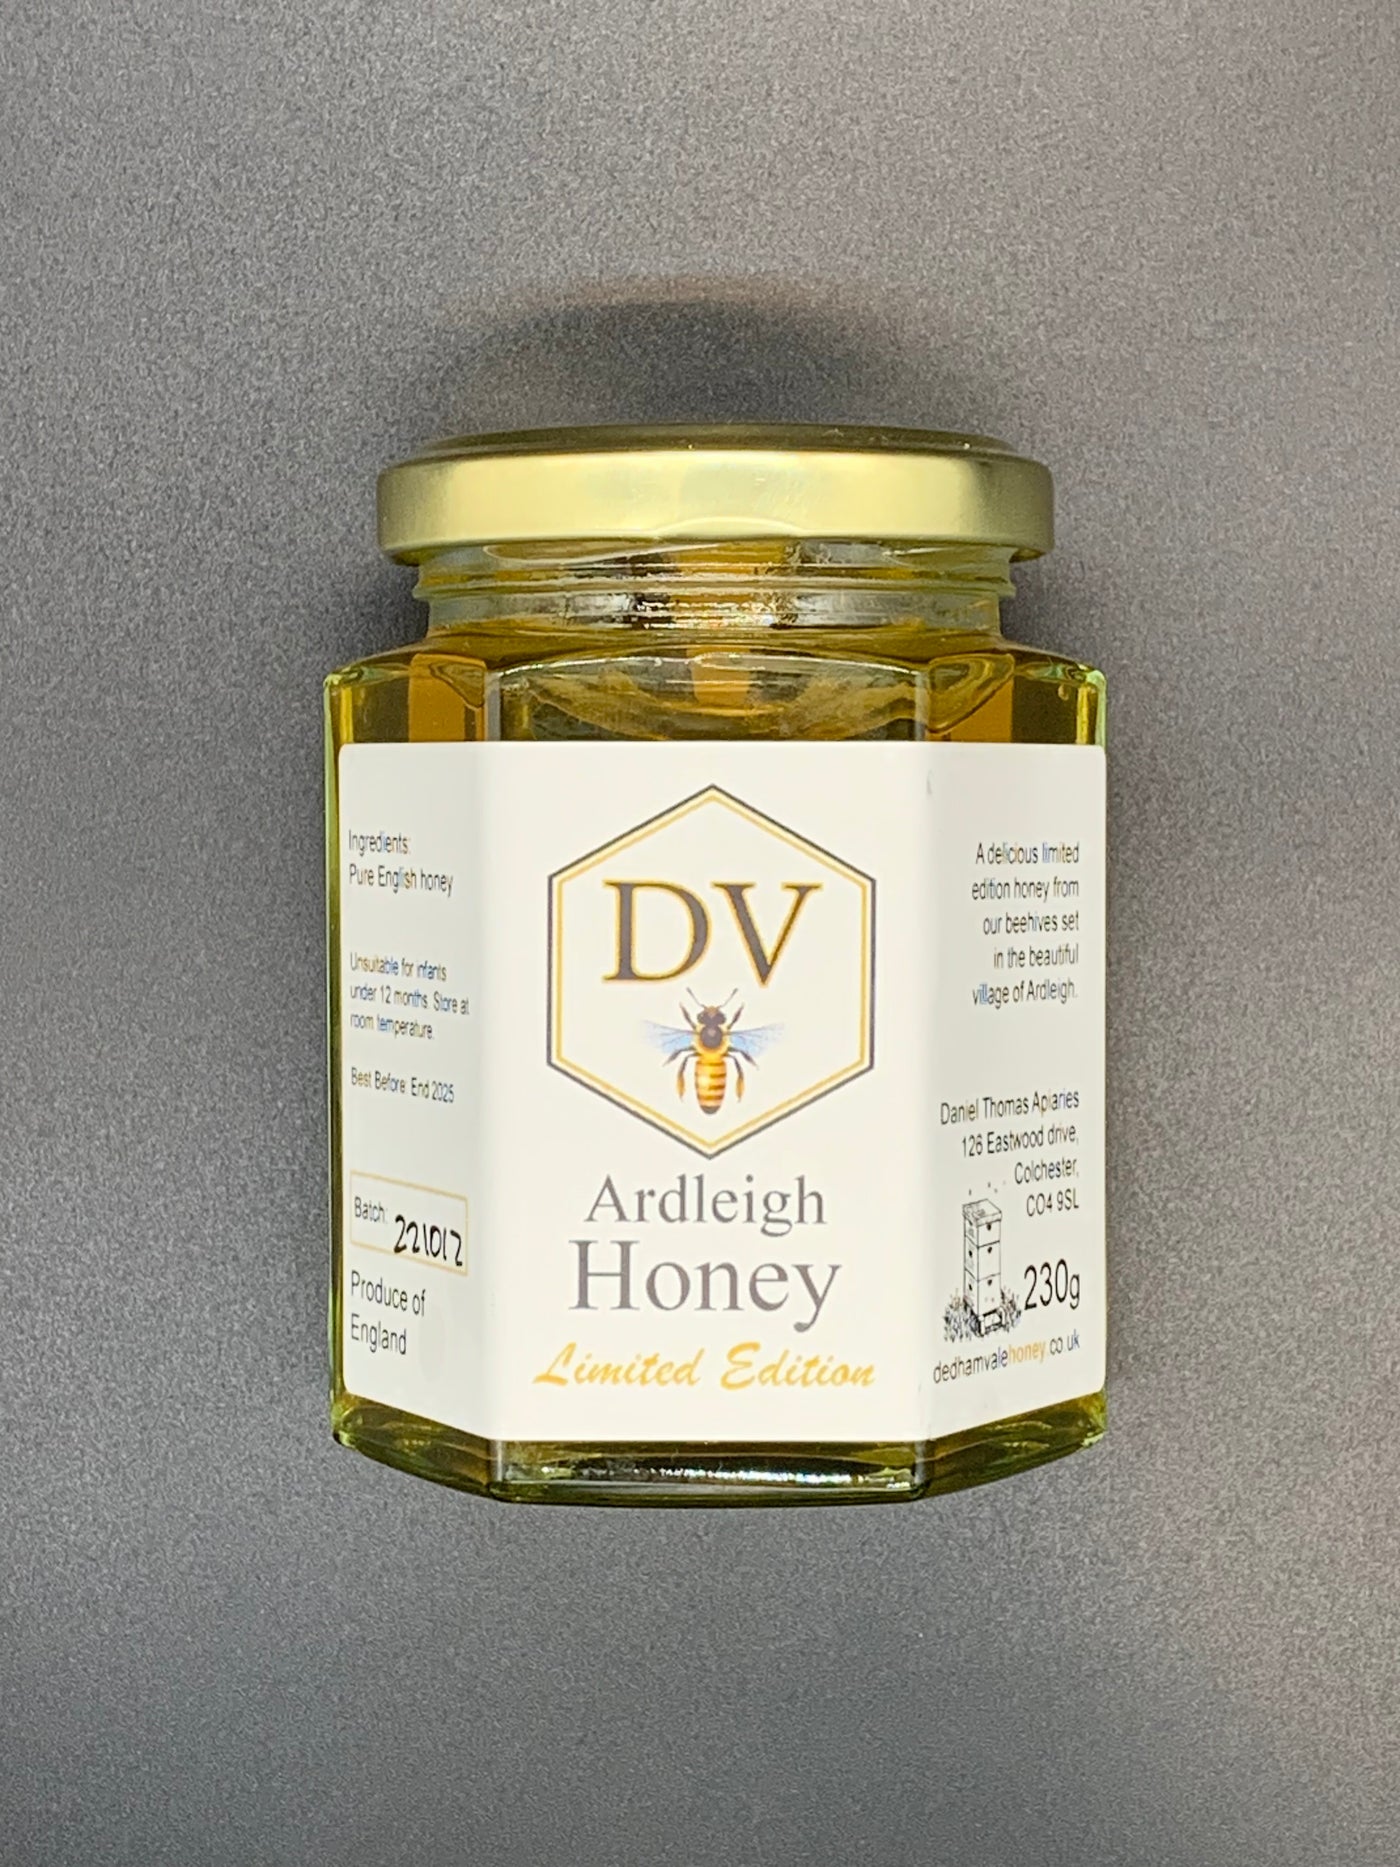 Dedham Vale Ardleigh Honey